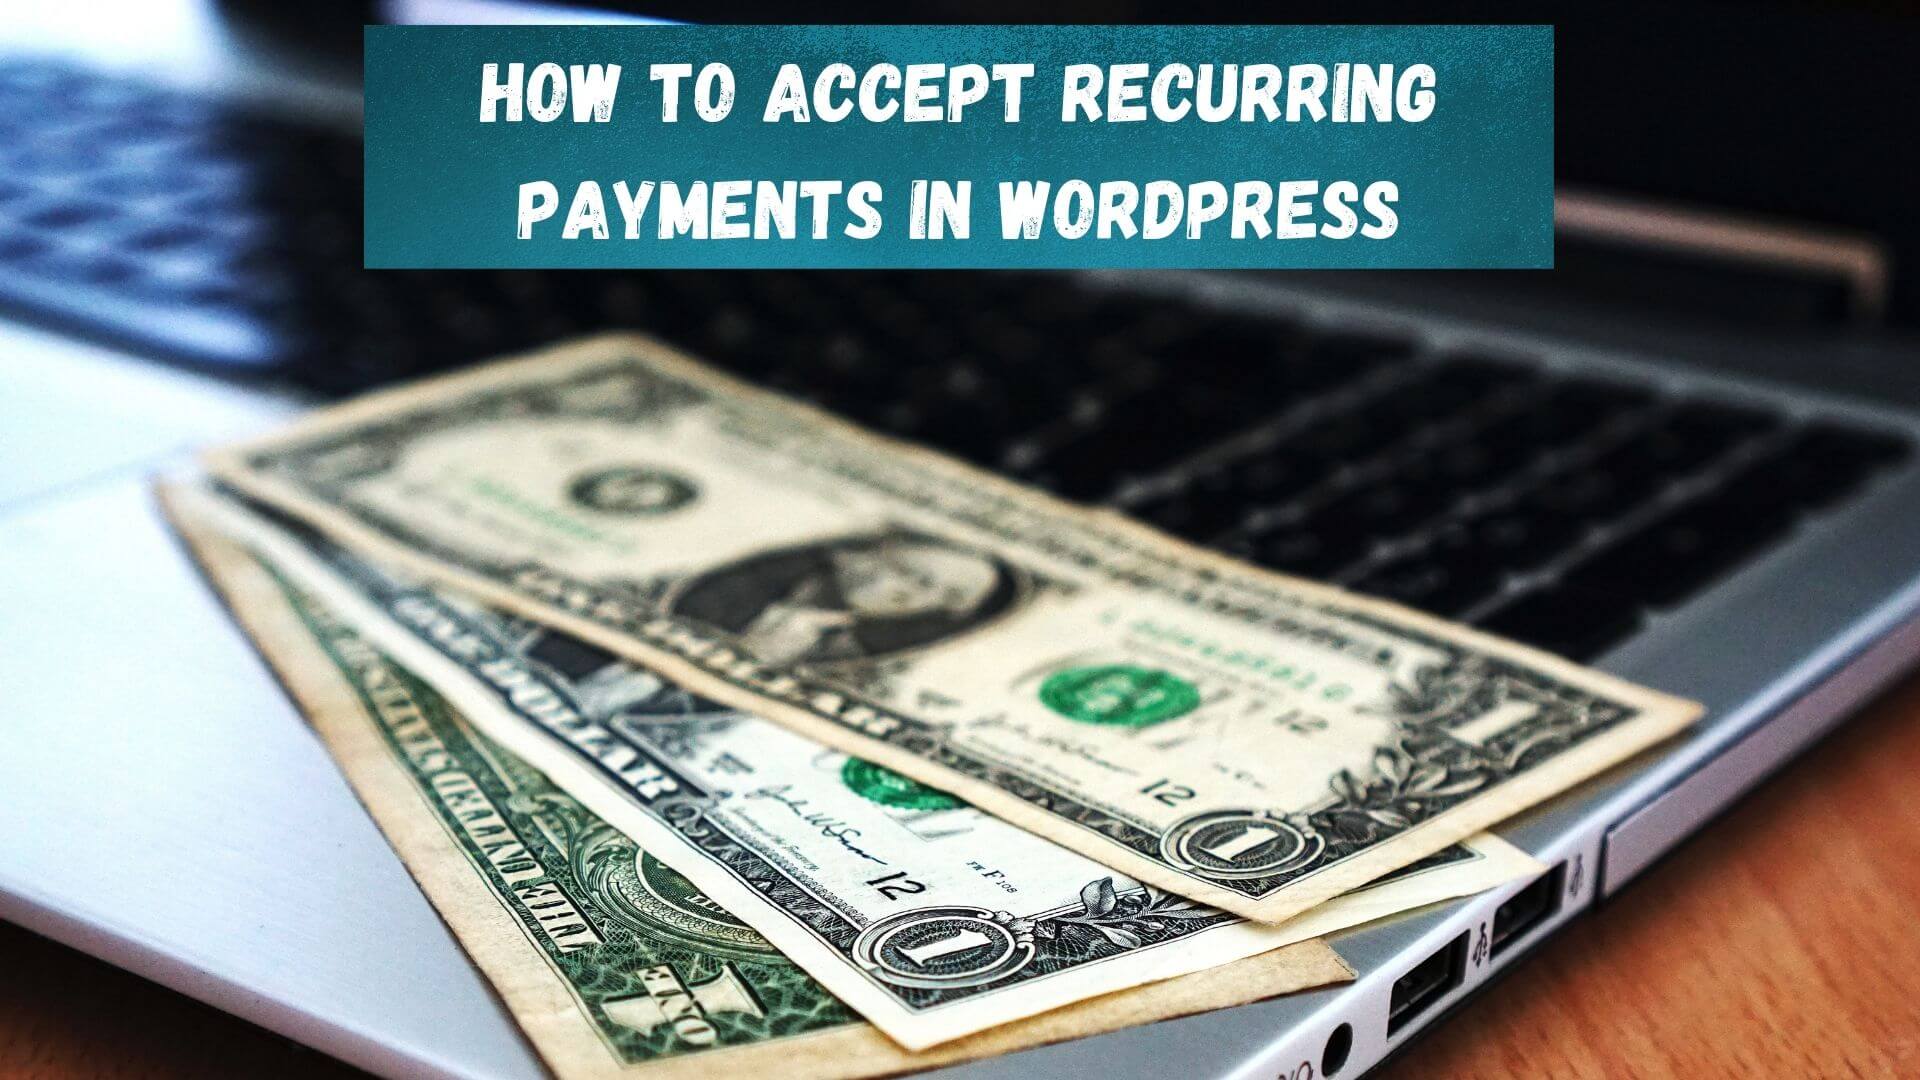 Accepting recurring payments in WordPress? Here's how to accept recurring payments on your website via WordPress in the easiest way possible.